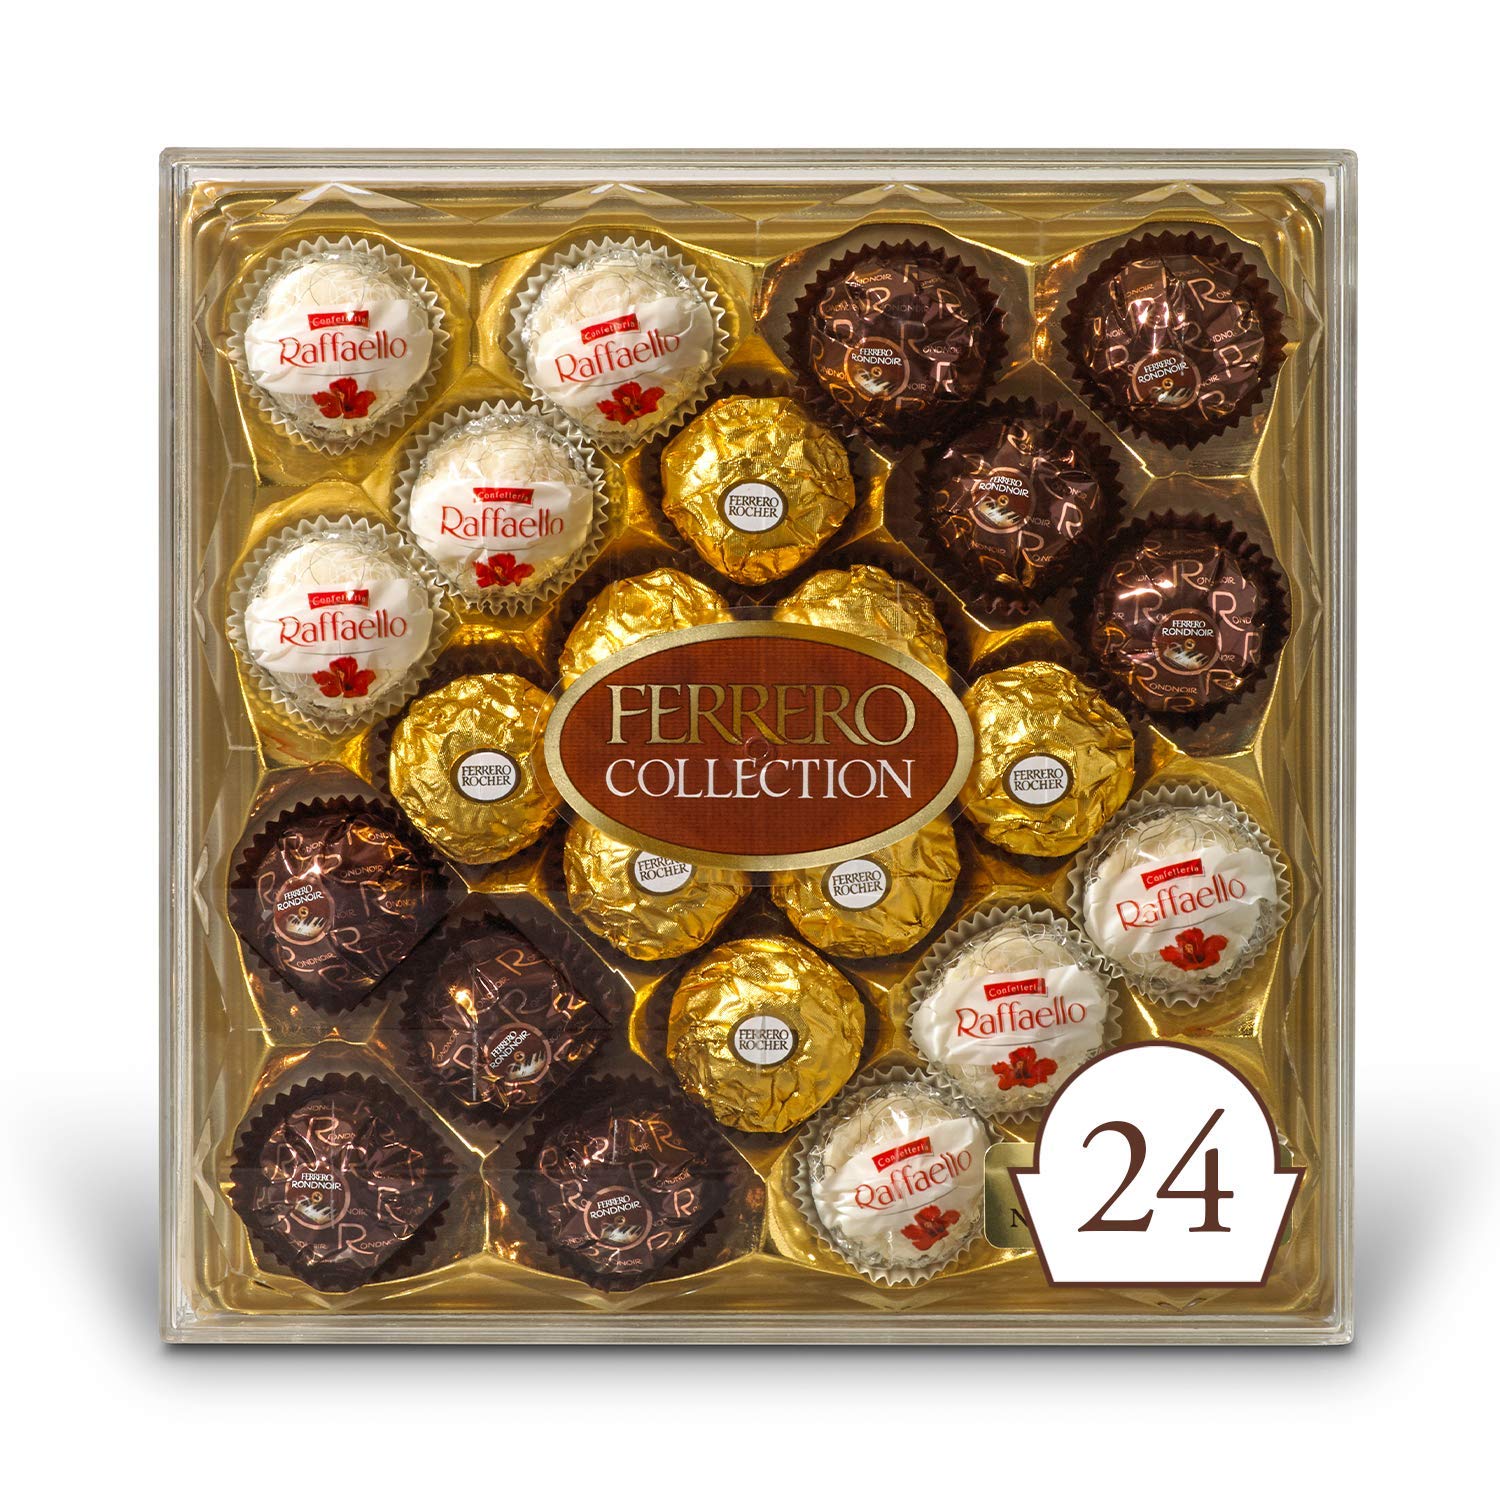 24-Count Ferrero Rocher Fine Hazelnut Milk Chocolates Gift Box $8.92 - Amazon